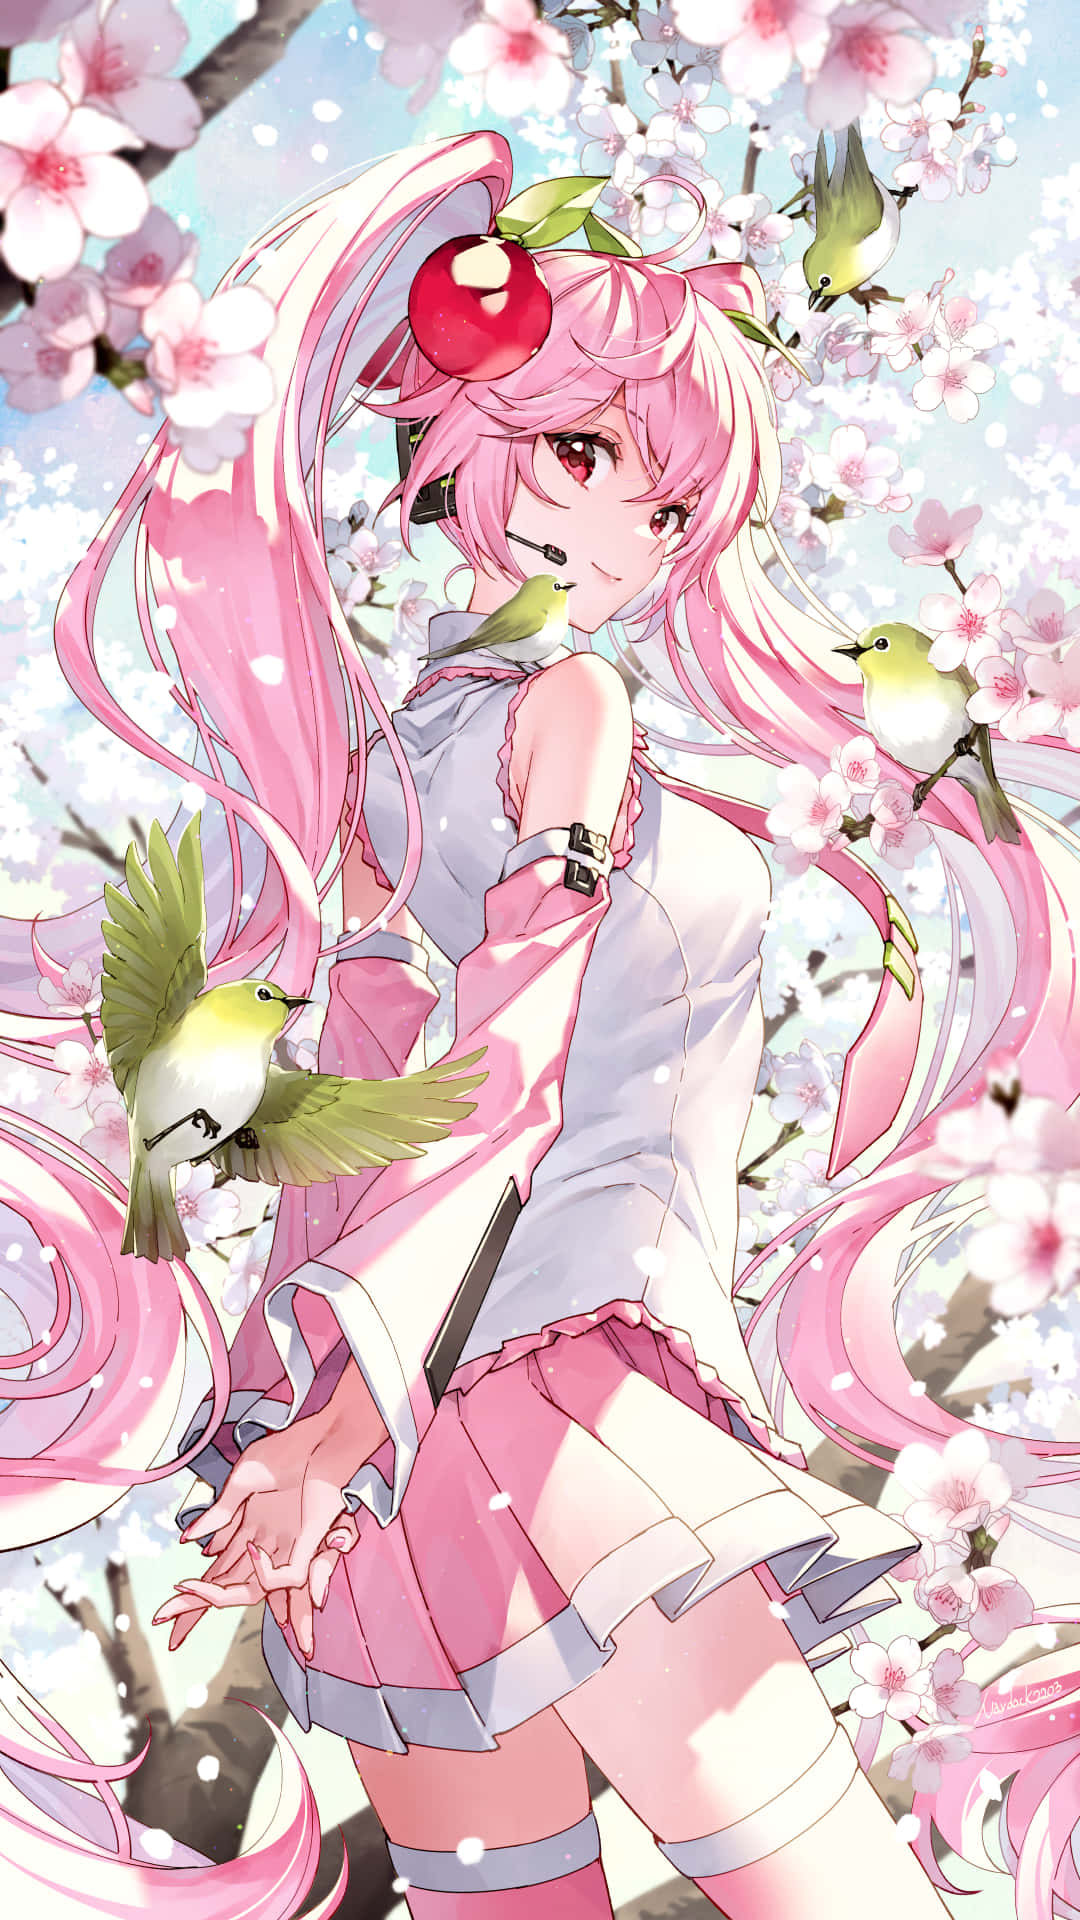 Vårigfantastisk Skönhet - Sakura Miku @bakgrundsbilder Wallpaper